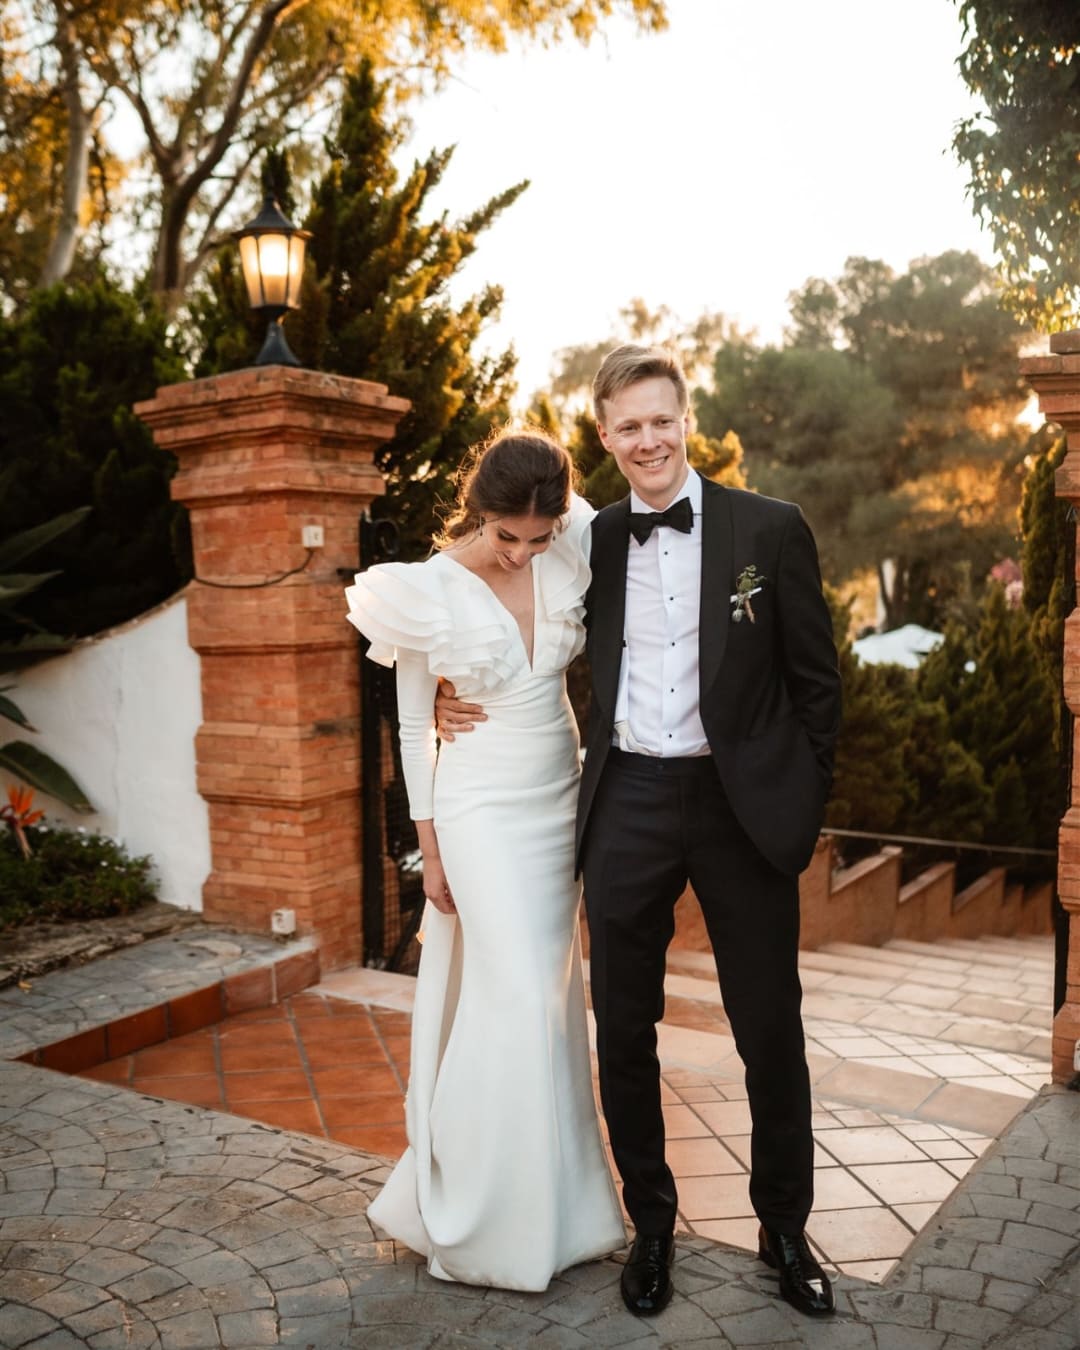 Wedding photographer Marbella